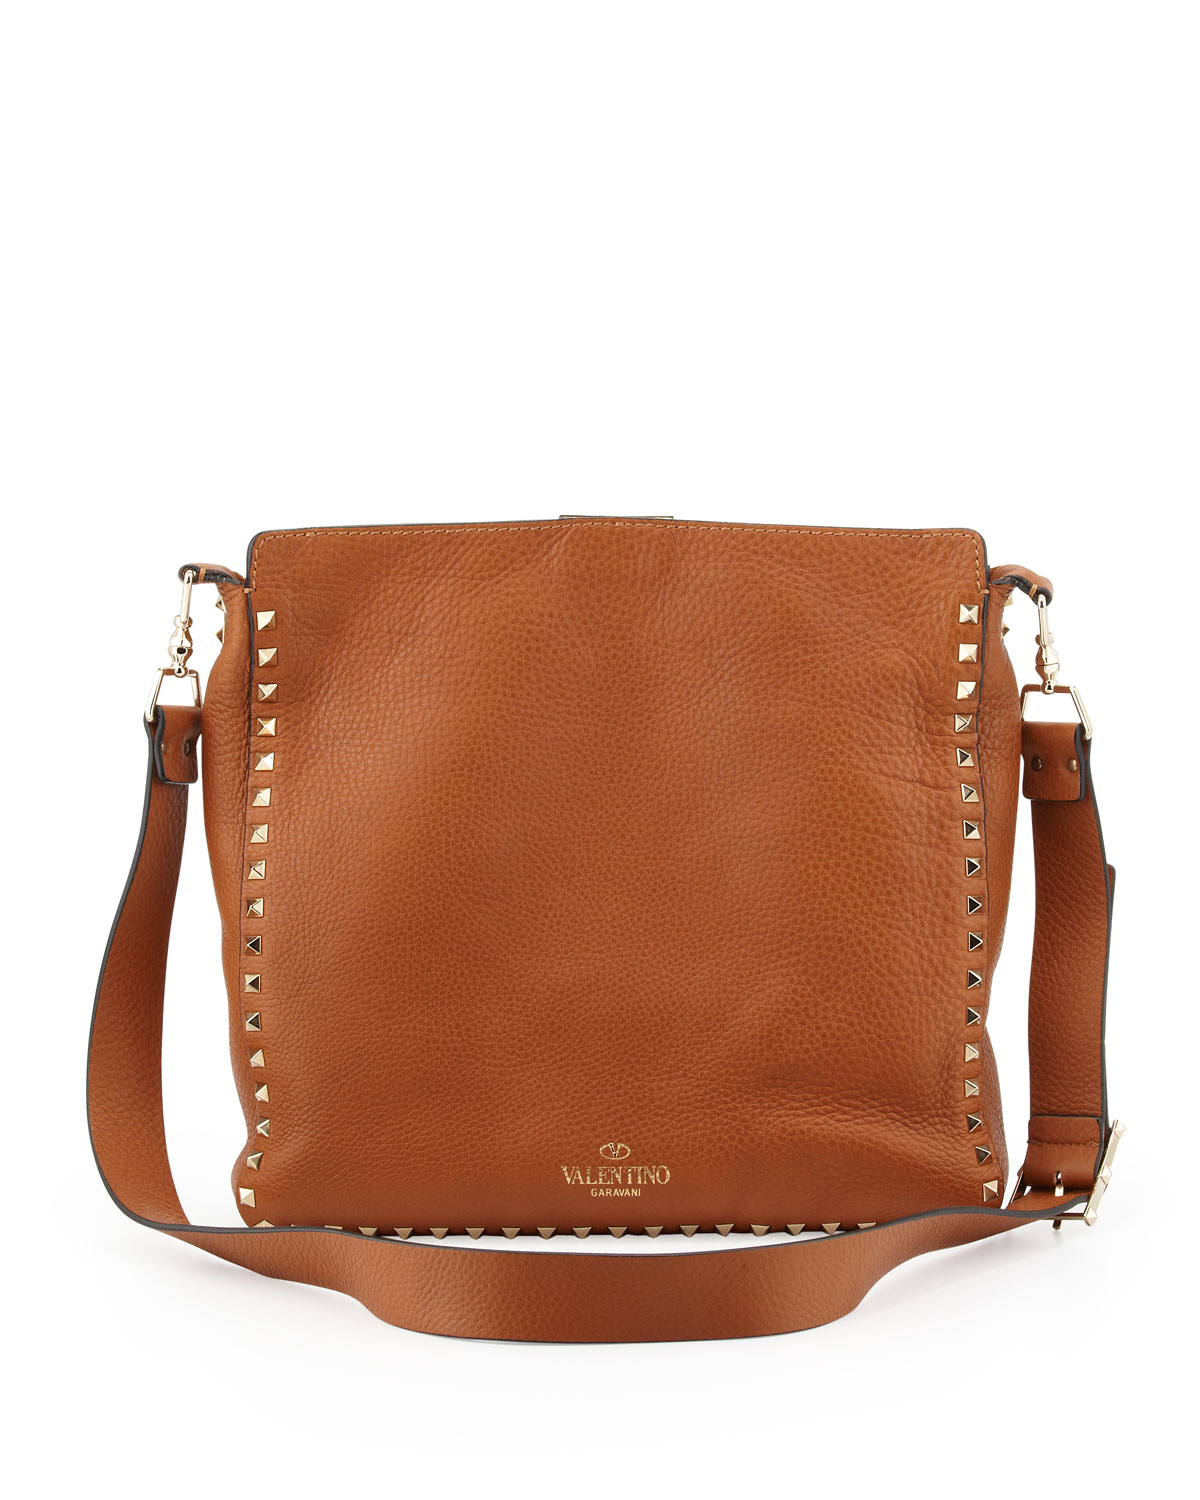 Lyst - Valentino Rockstud Medium Flip-lock Hobo Bag in Brown